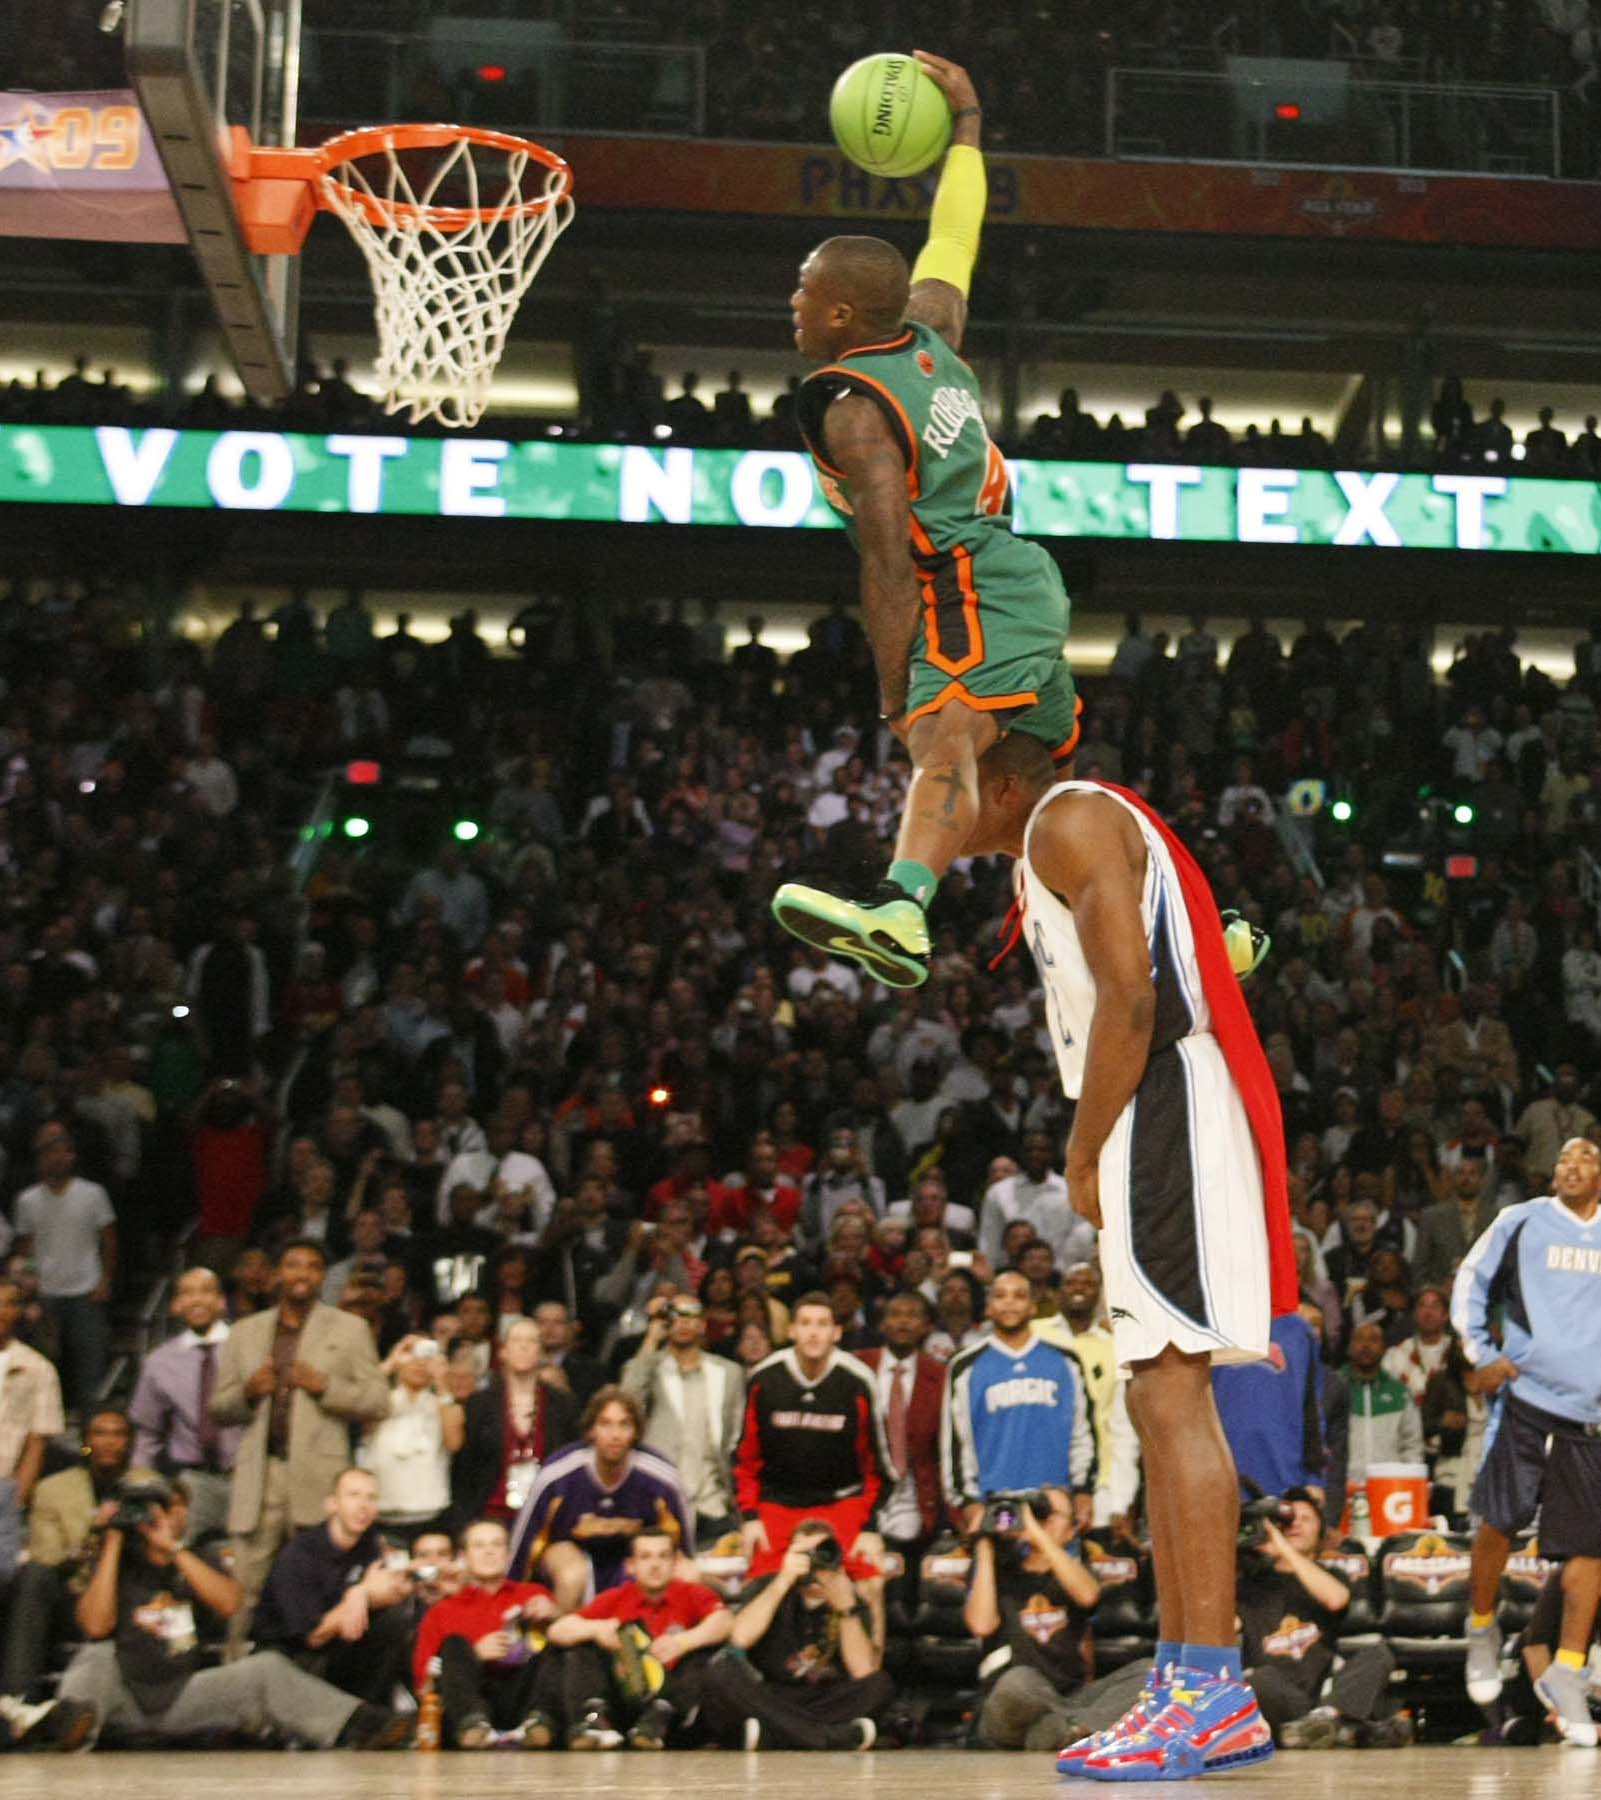 You Got Dunked On: 2009 NBA Slam Dunk Contest: Nate Robinson Dunks